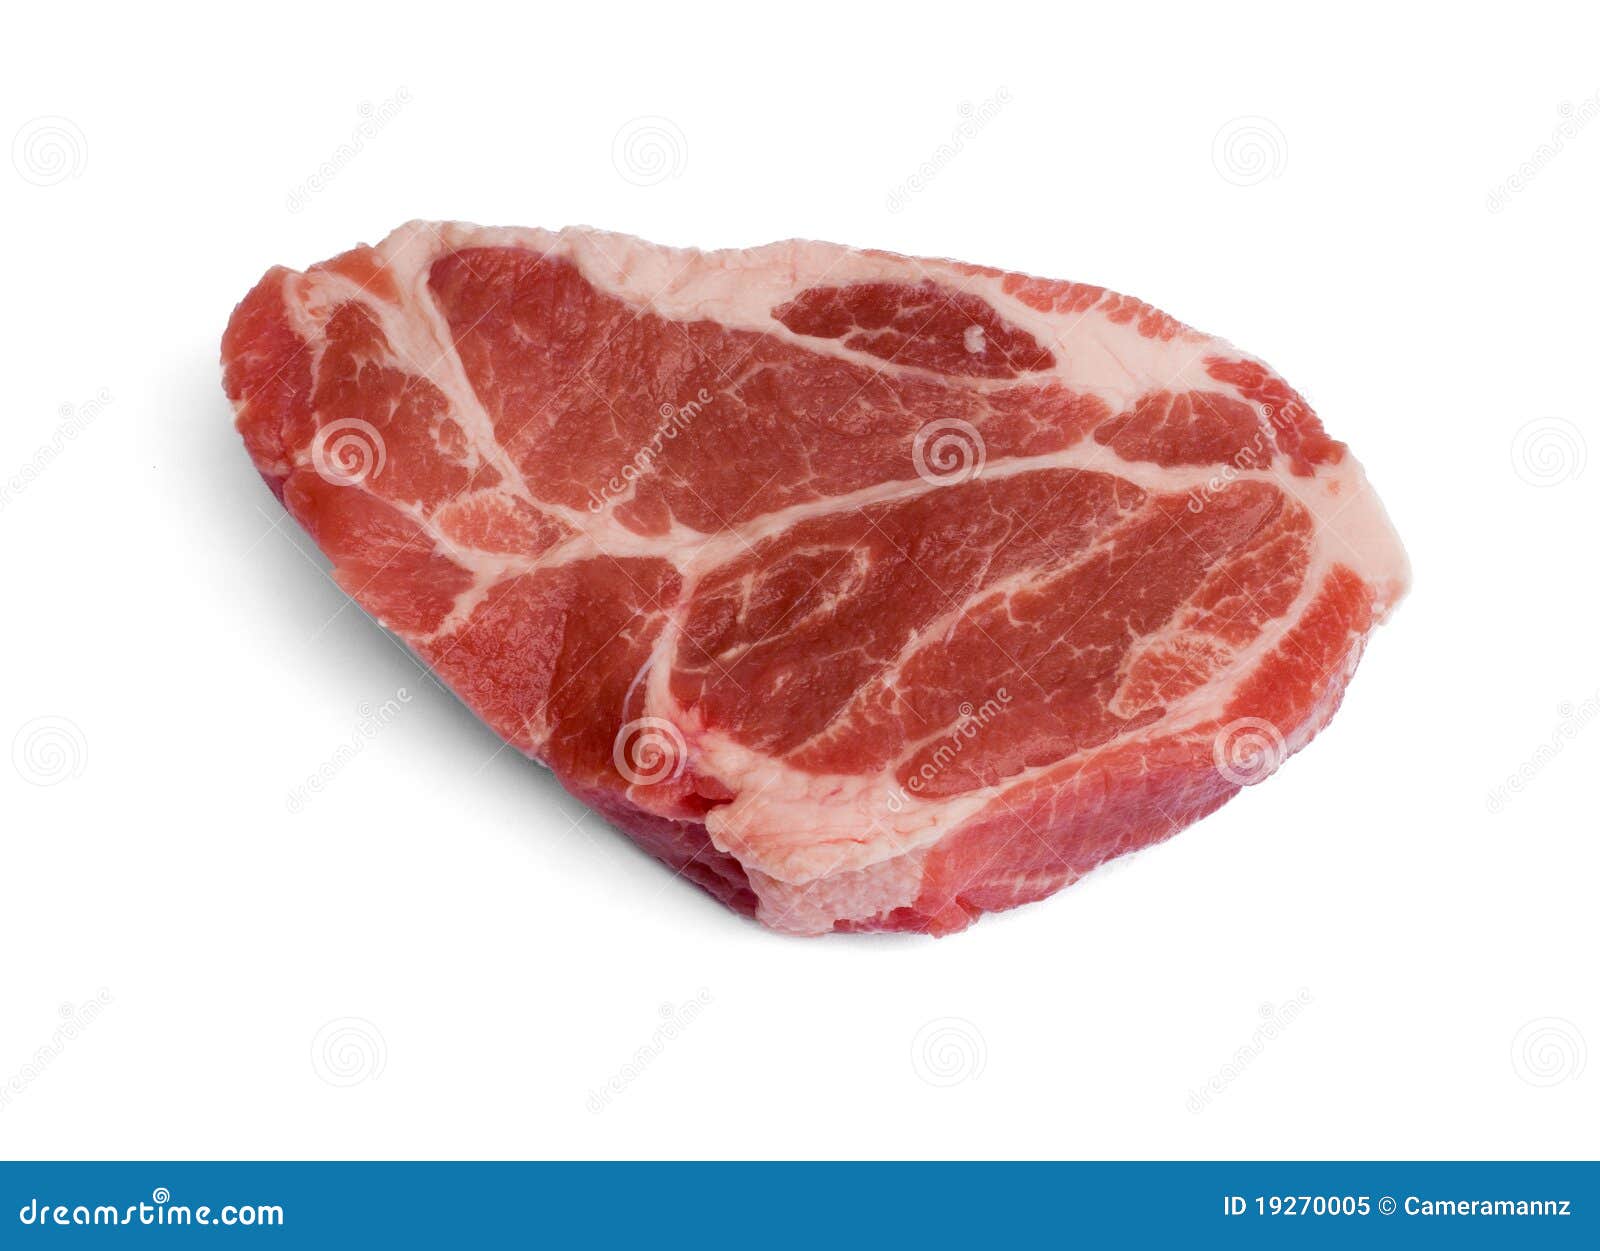 pork scotch fillet steak